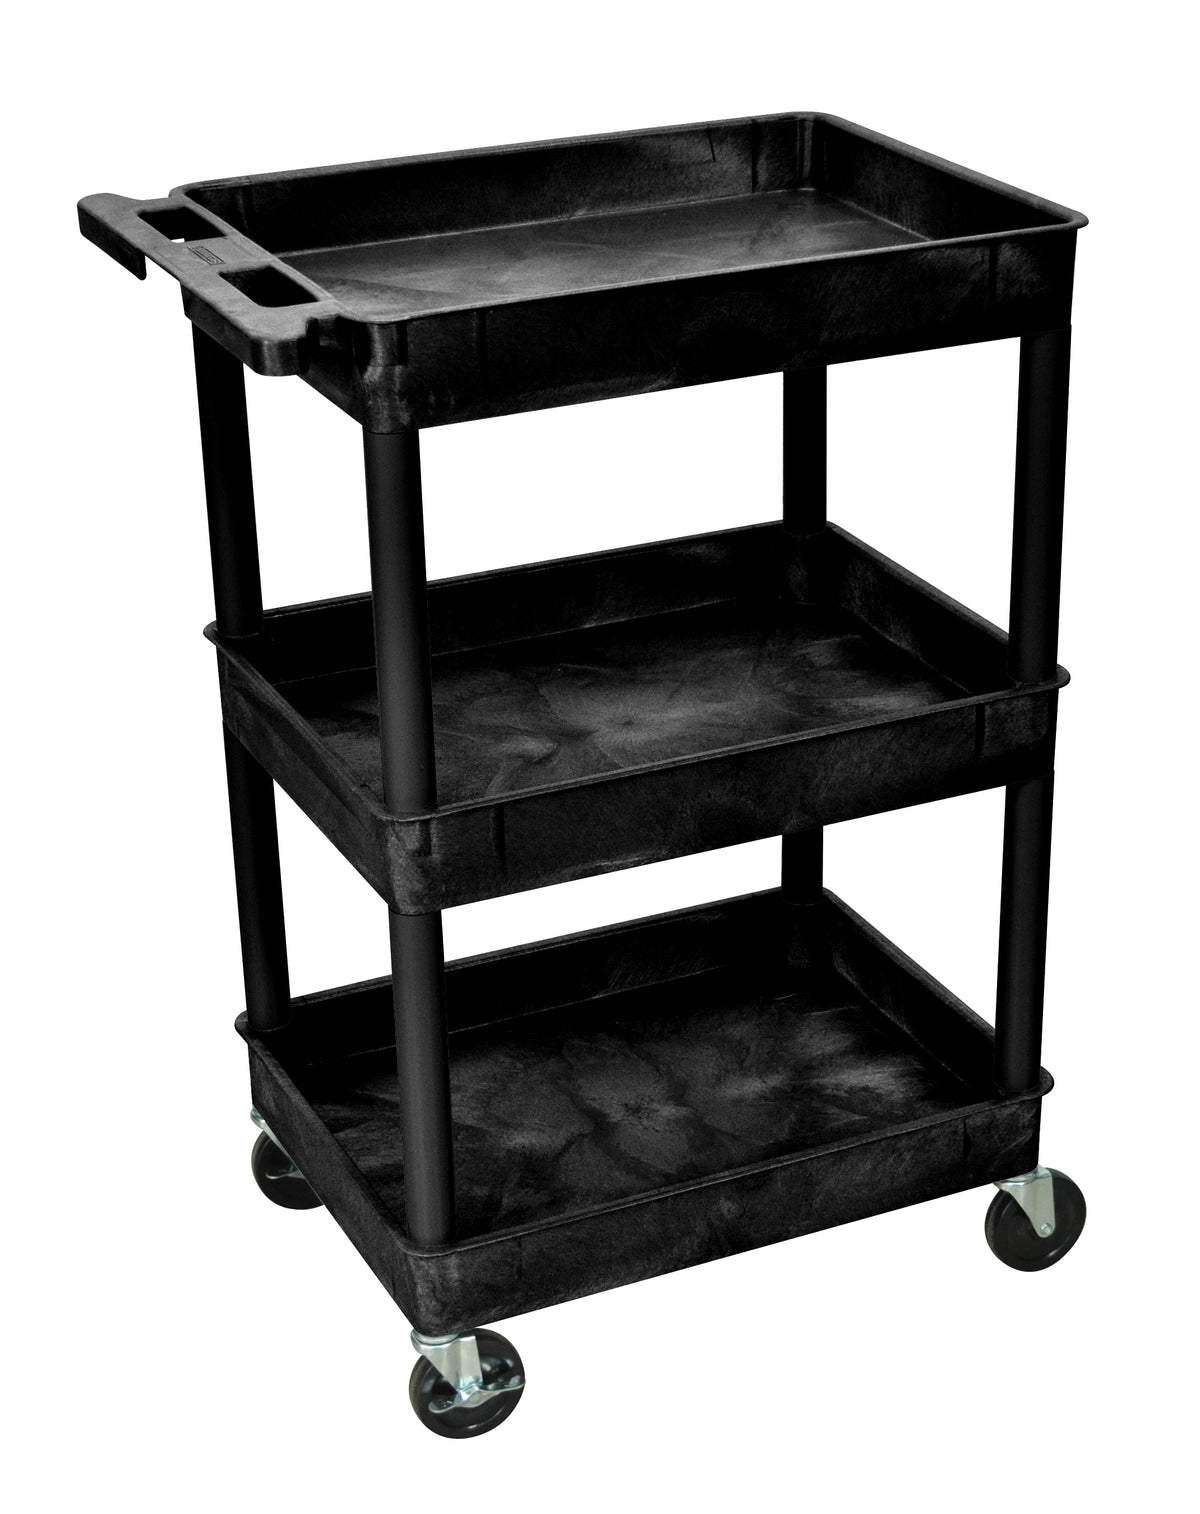 buy kitchen storage carts at cheap rate in bulk. wholesale & retail storage & organizer baskets store.